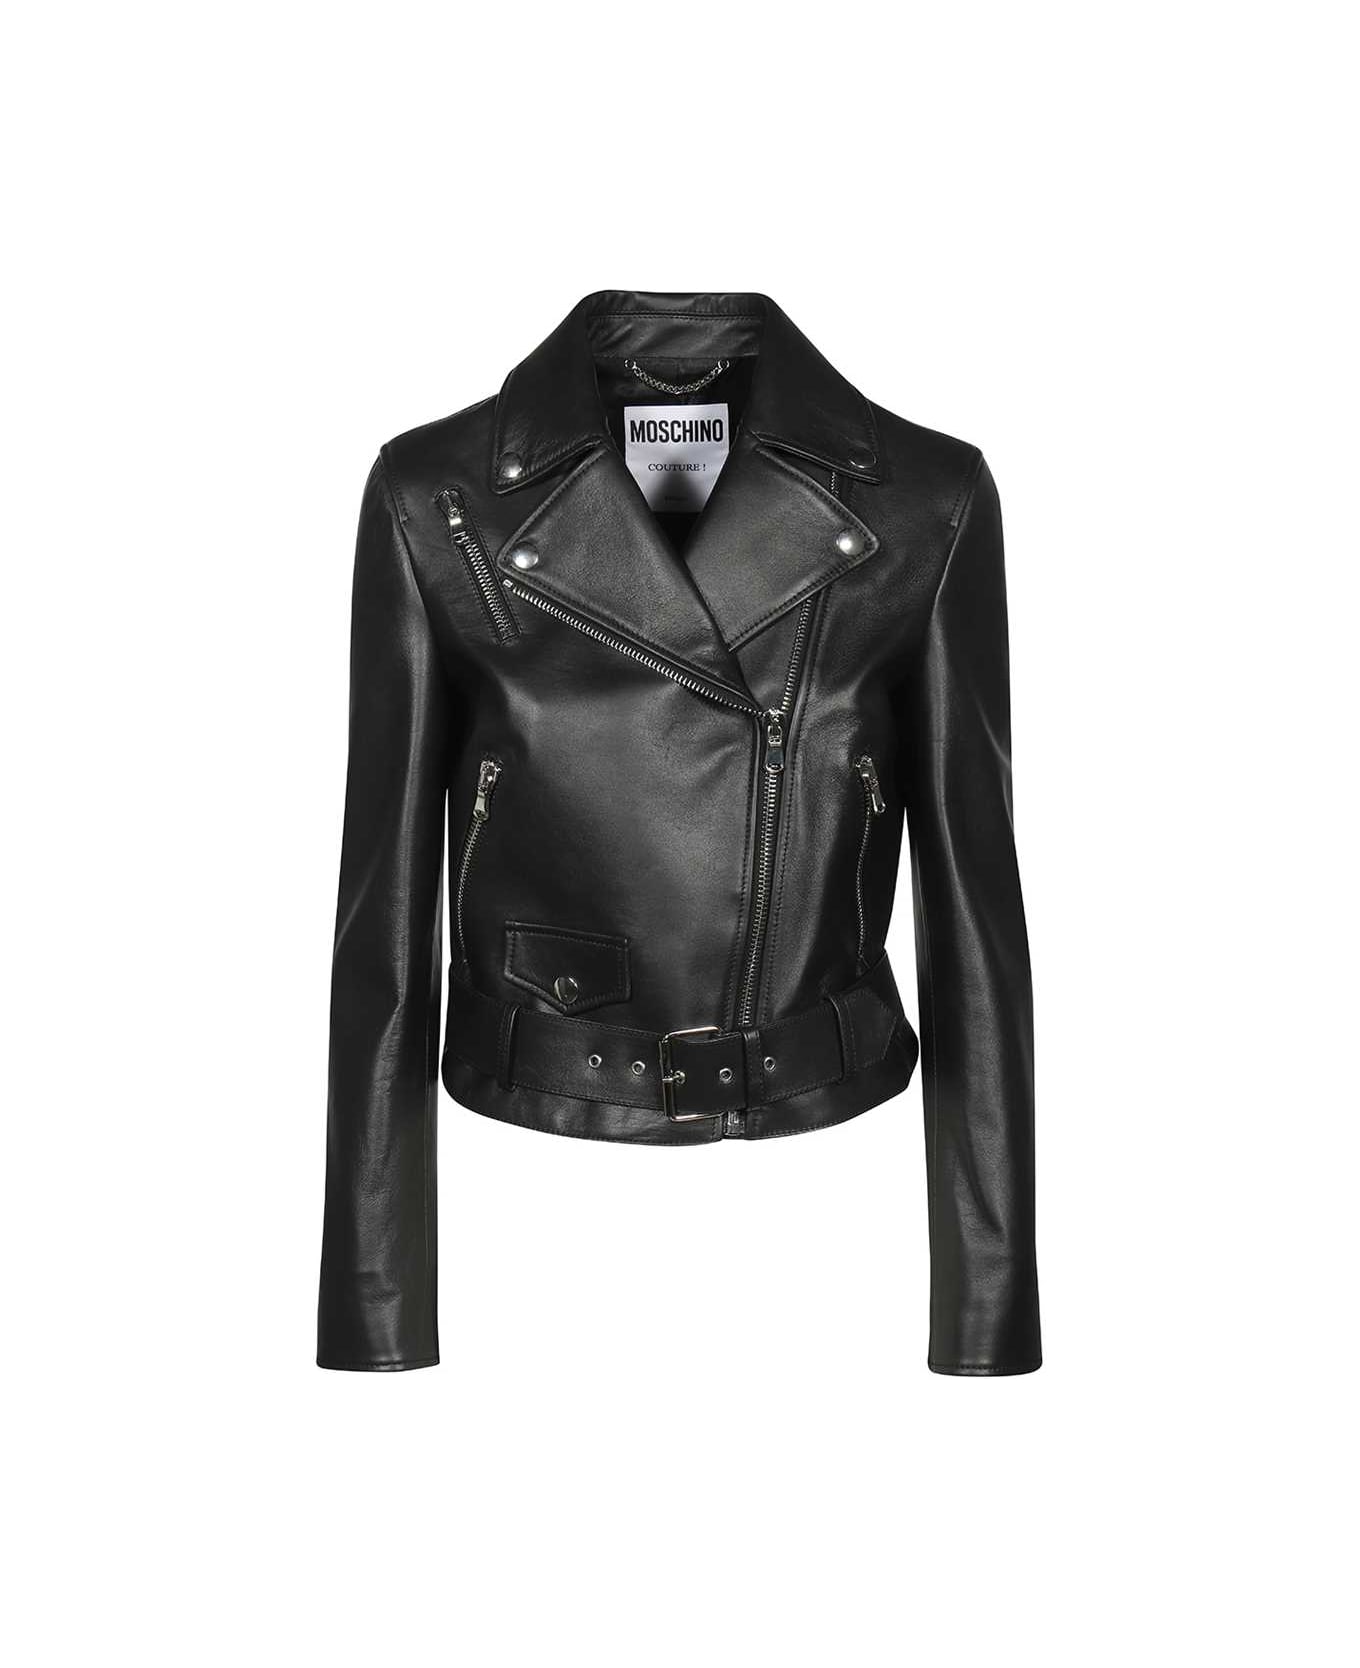 Moschino Leather Jacket - black